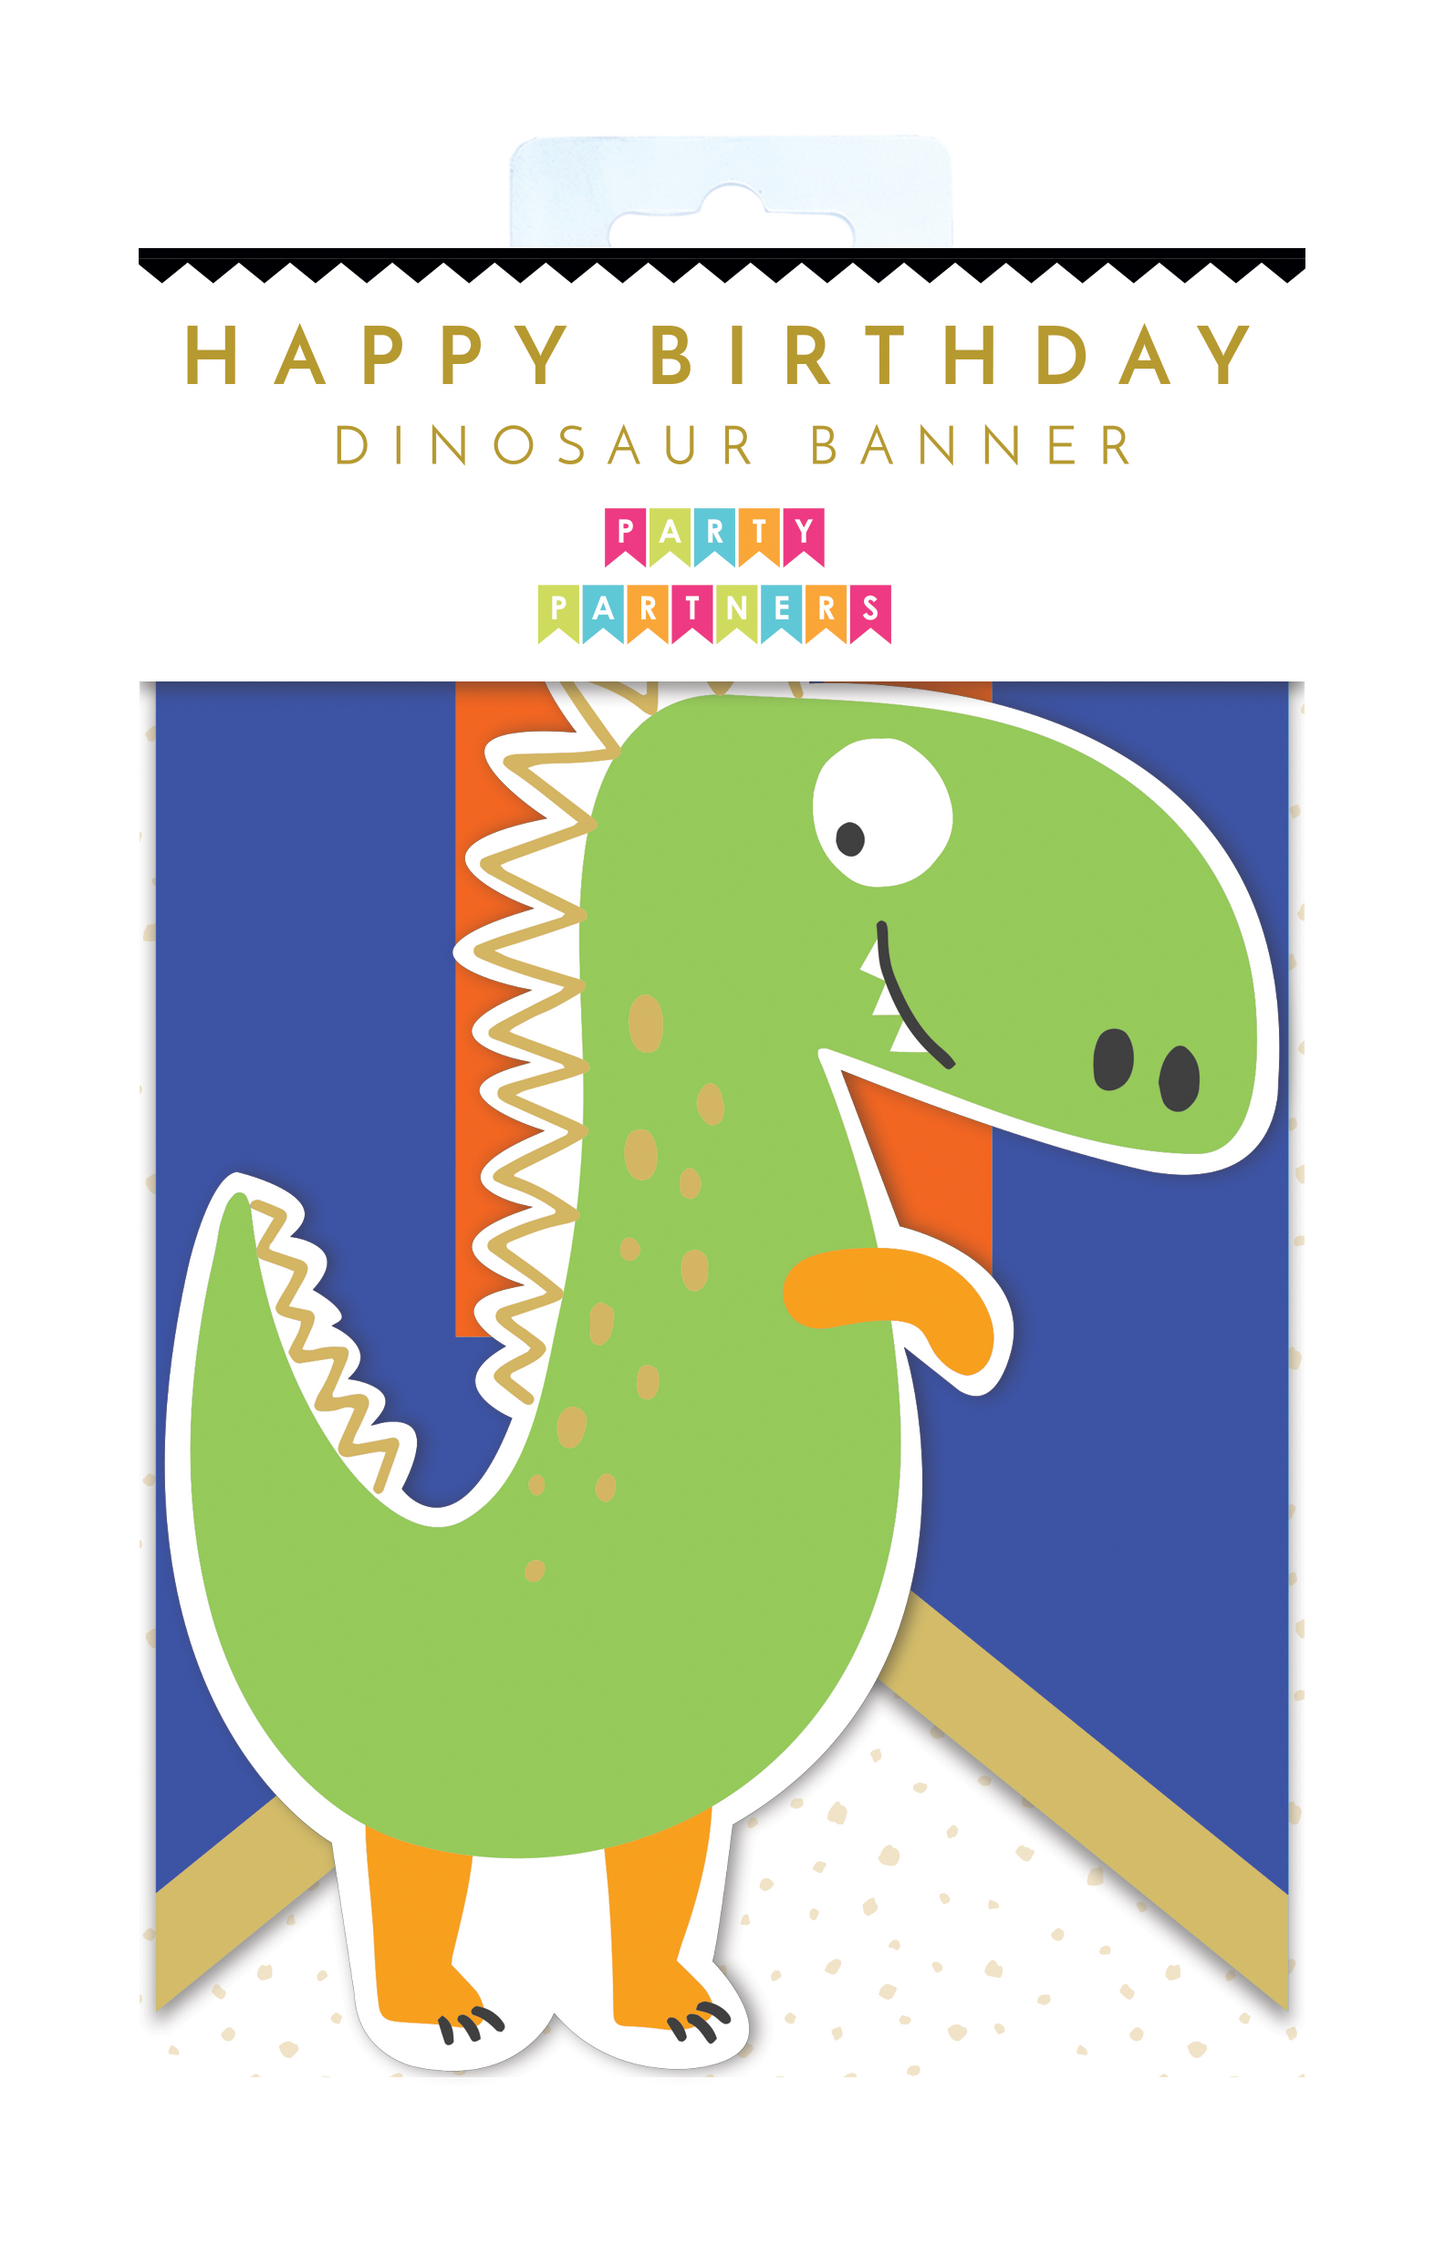 Dinosaur Banner Happy Birthday